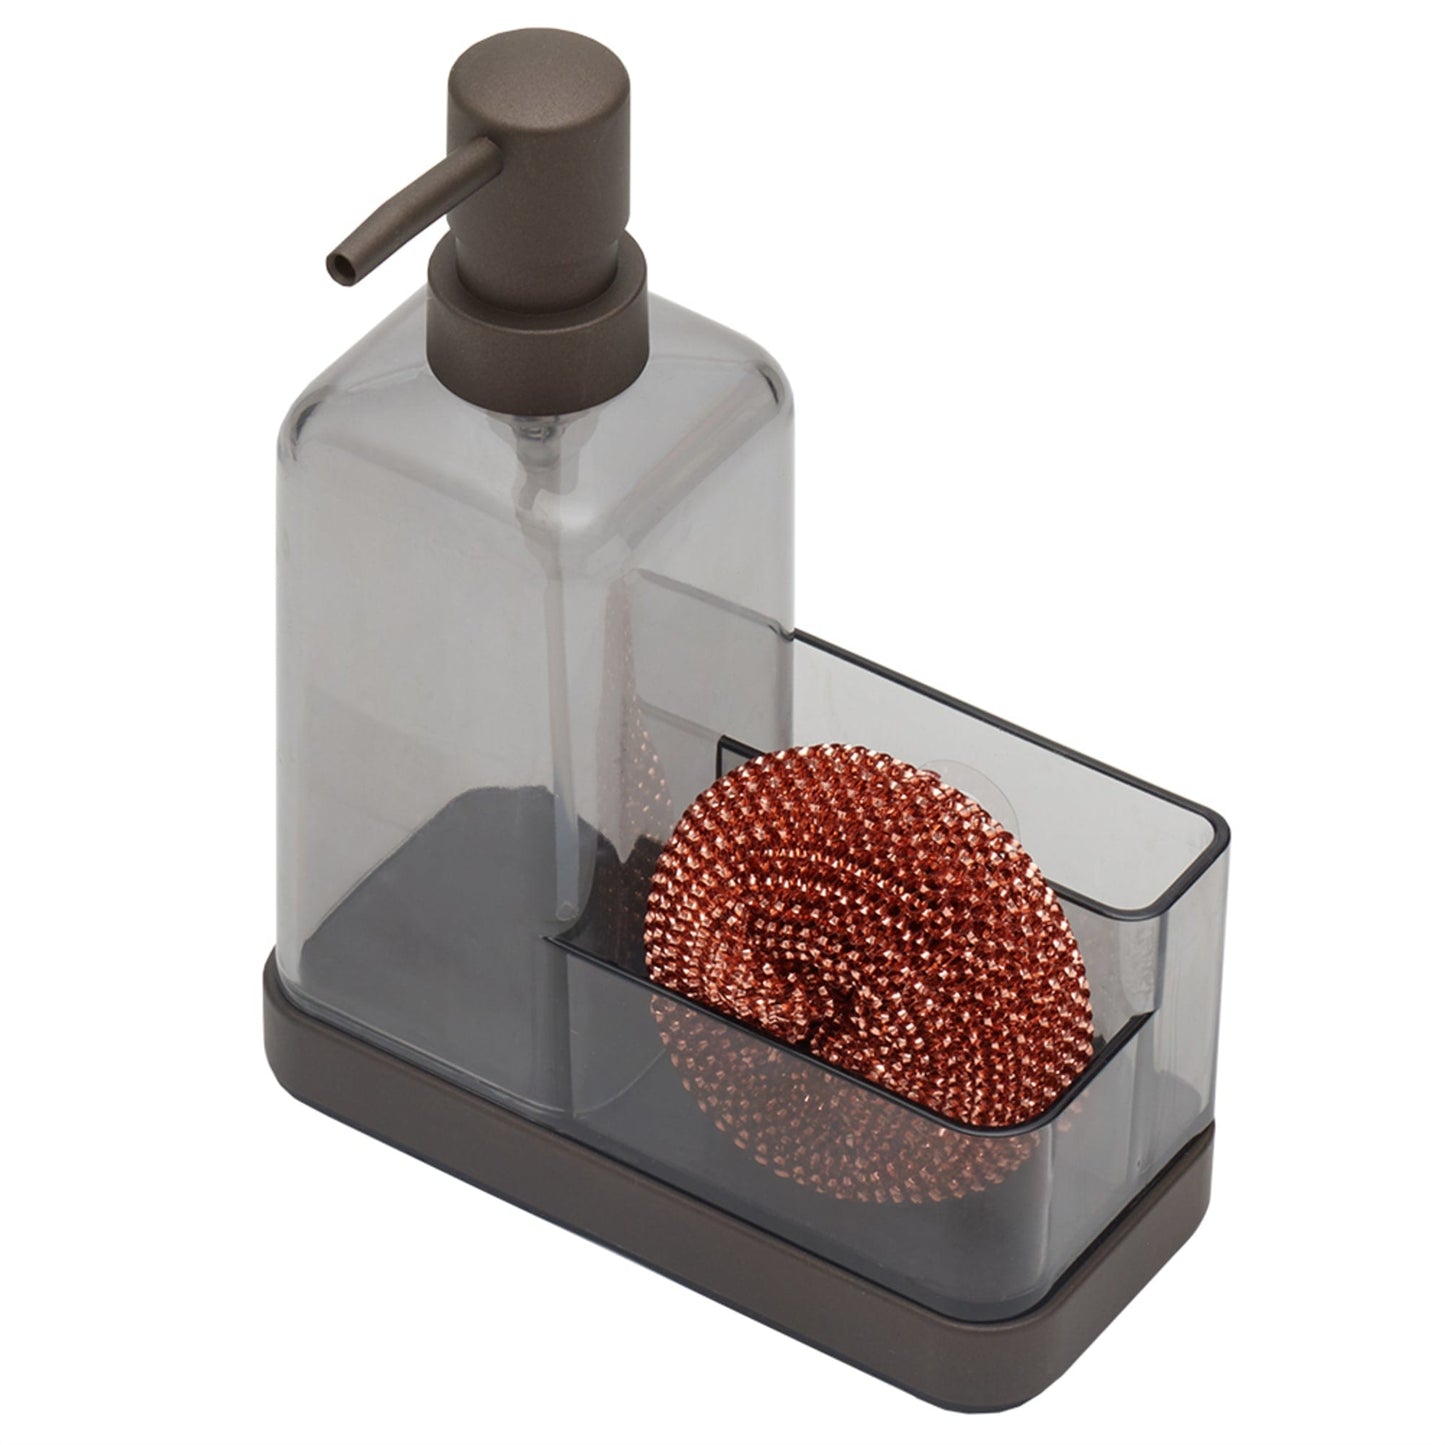 13.5 oz. Plastic Soap Dispenser with Sponge Compartment, Bronze